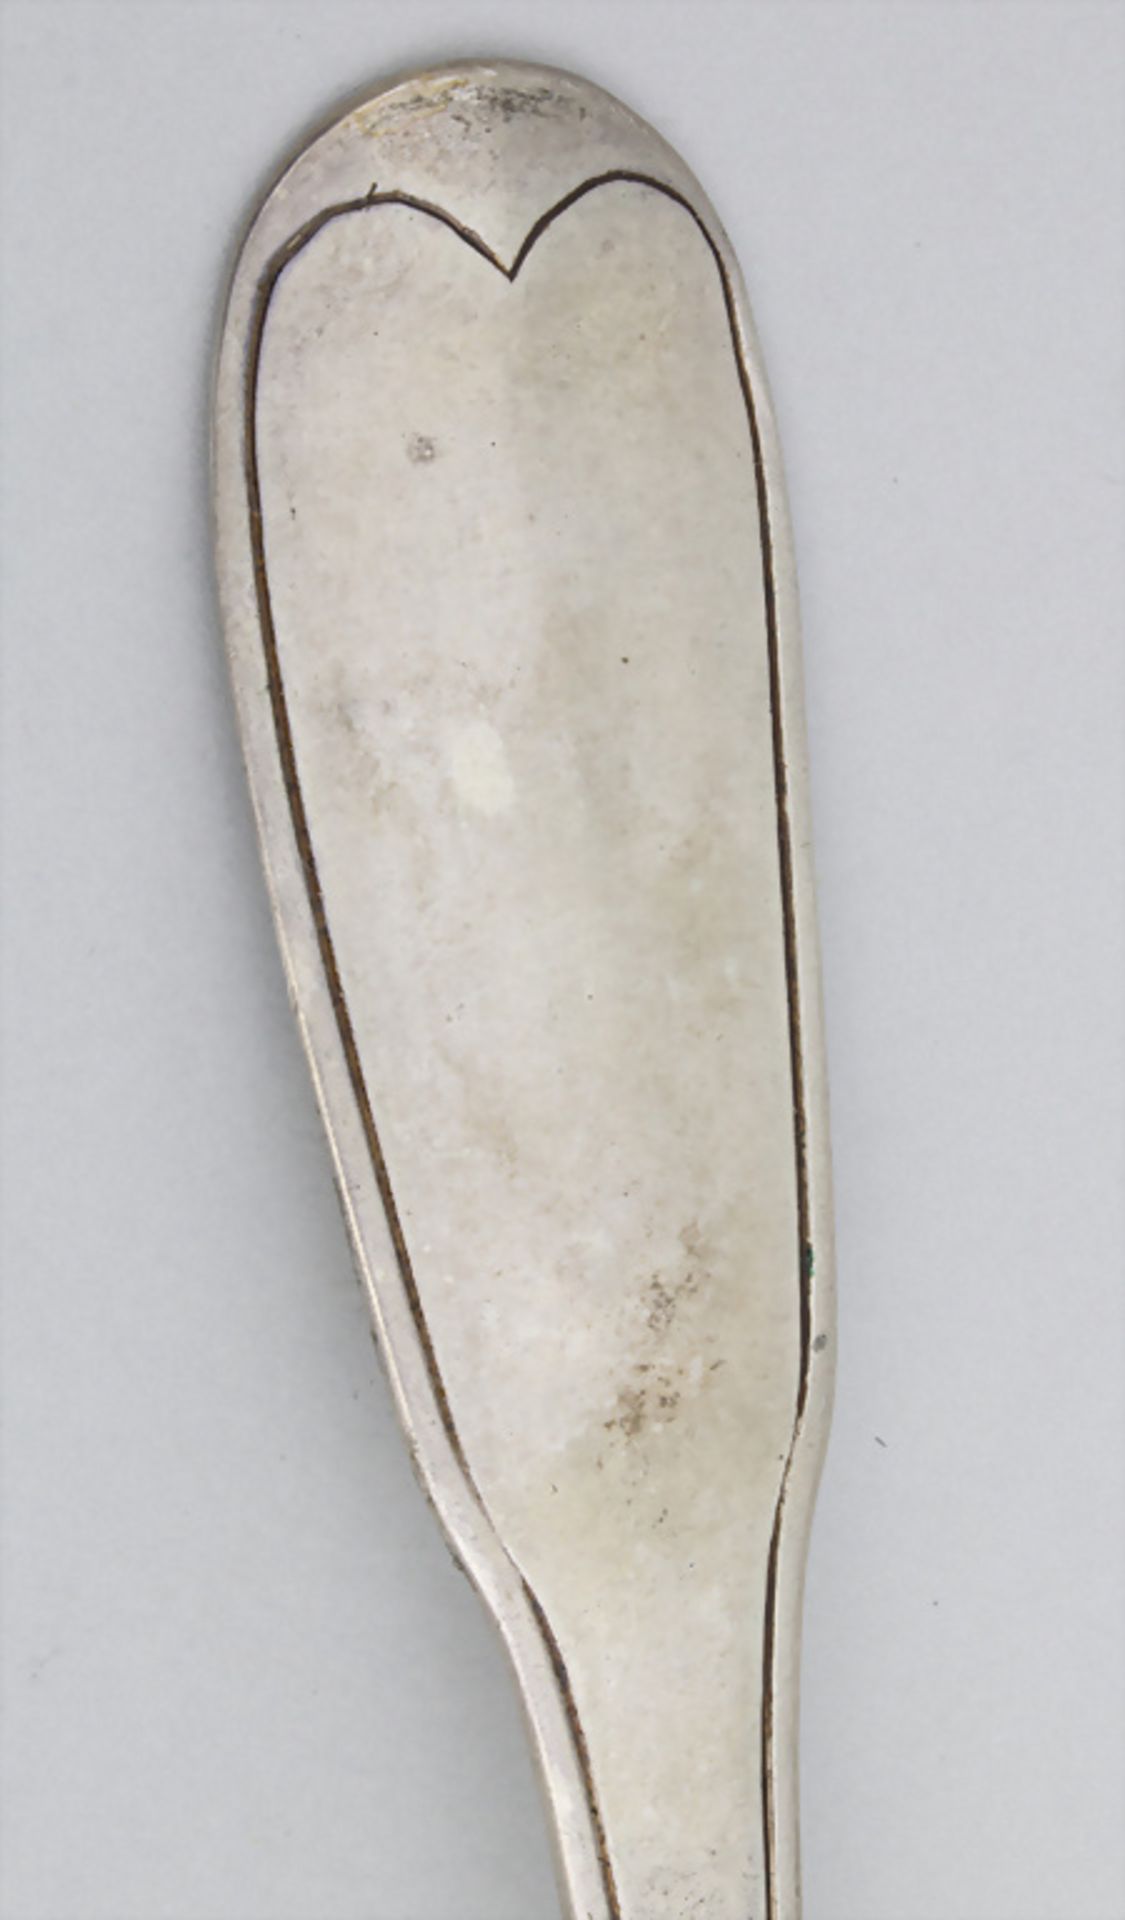 6 Löffel / 6 silver spoons, Johann Heinrich Philipp Schott, Frankfurt, 1805 - Image 6 of 8